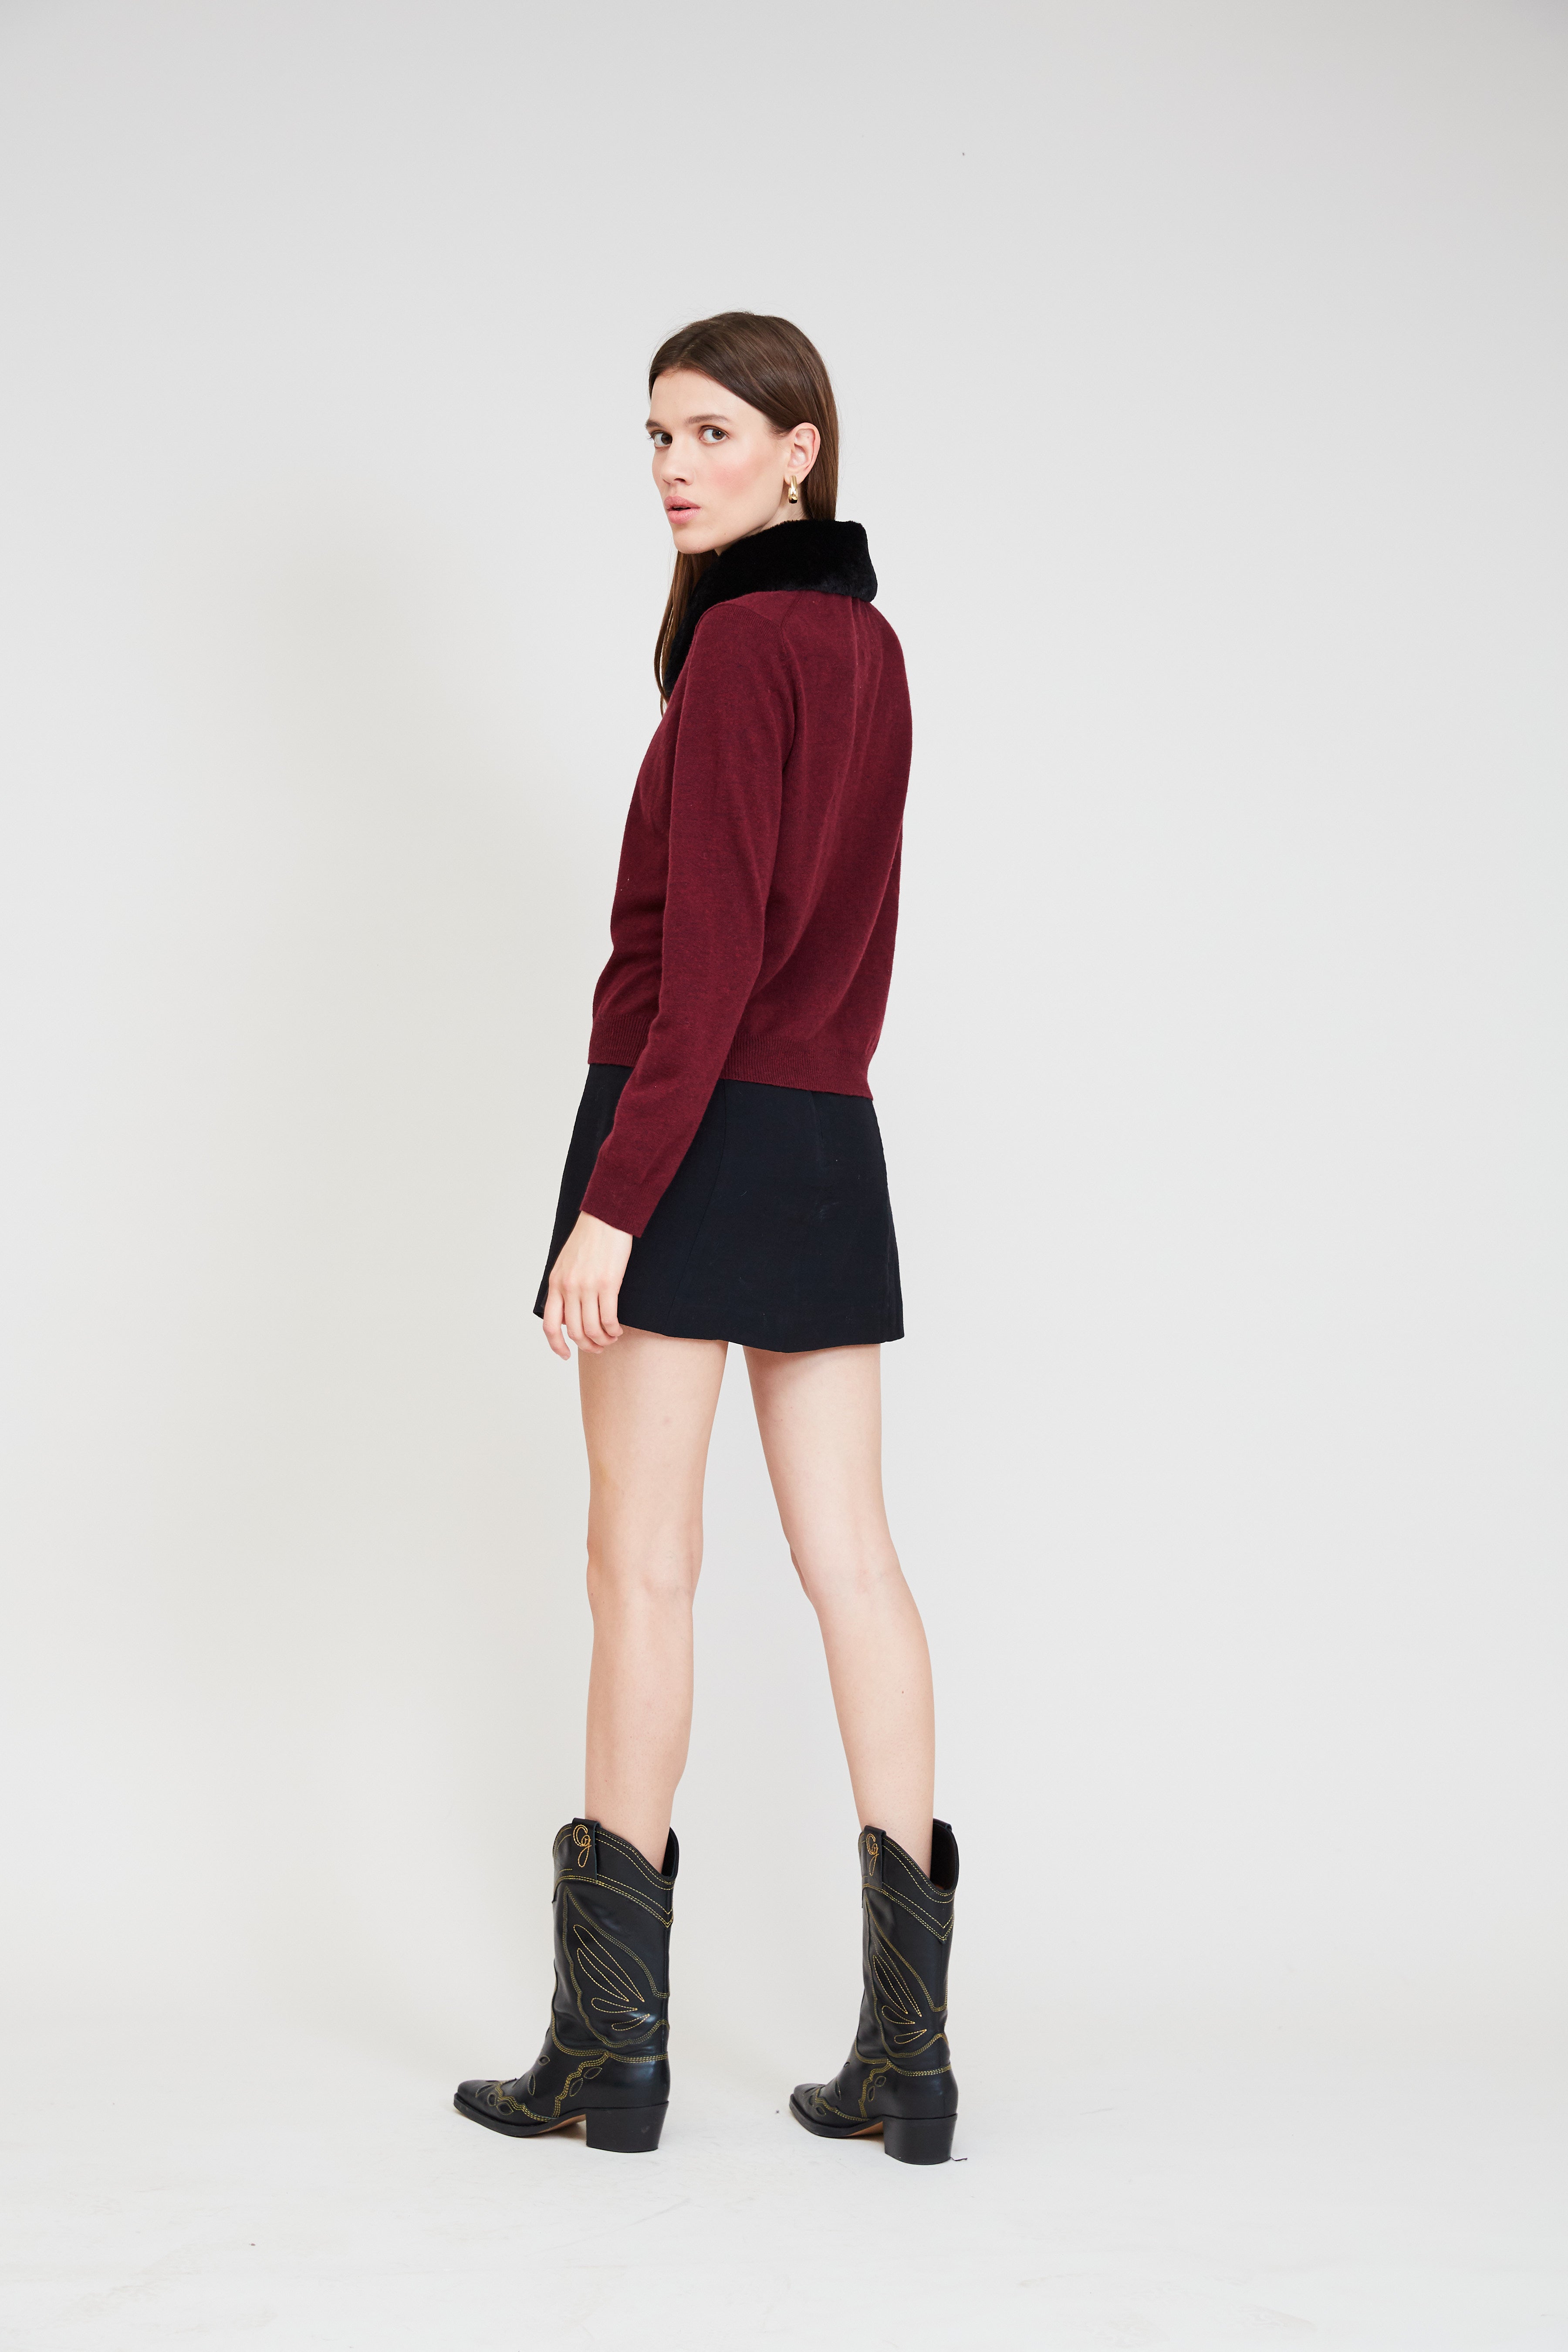 Copper Brown Mock Neck Faux Fur Sleeveless Sweater Top – Aquarius Brand